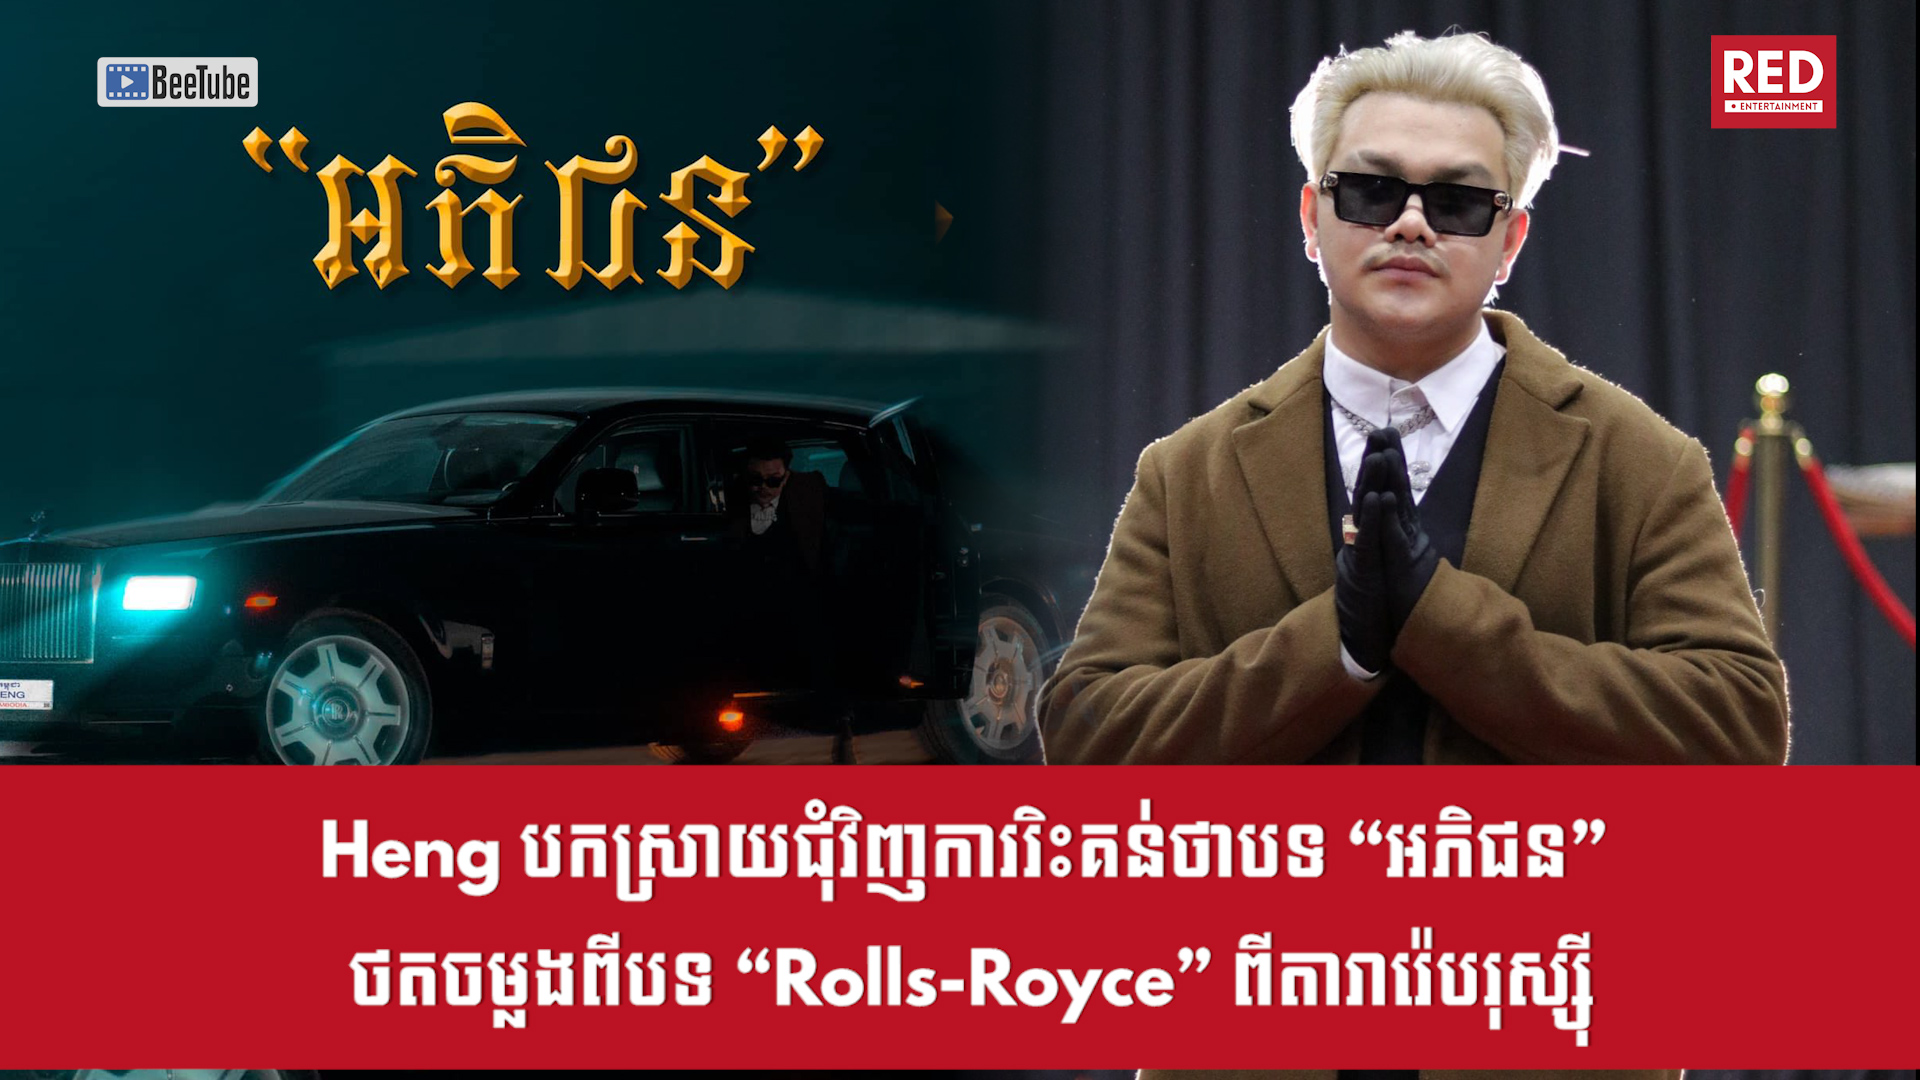 ⁣Heng ចេញមុខបកស្រាយជុំវិញរឿងការរិះគន់បទ “អភិជន” Copy ពីបទ “Rolls-Royce” ពីតារារ៉េបរុស្ស៊ី